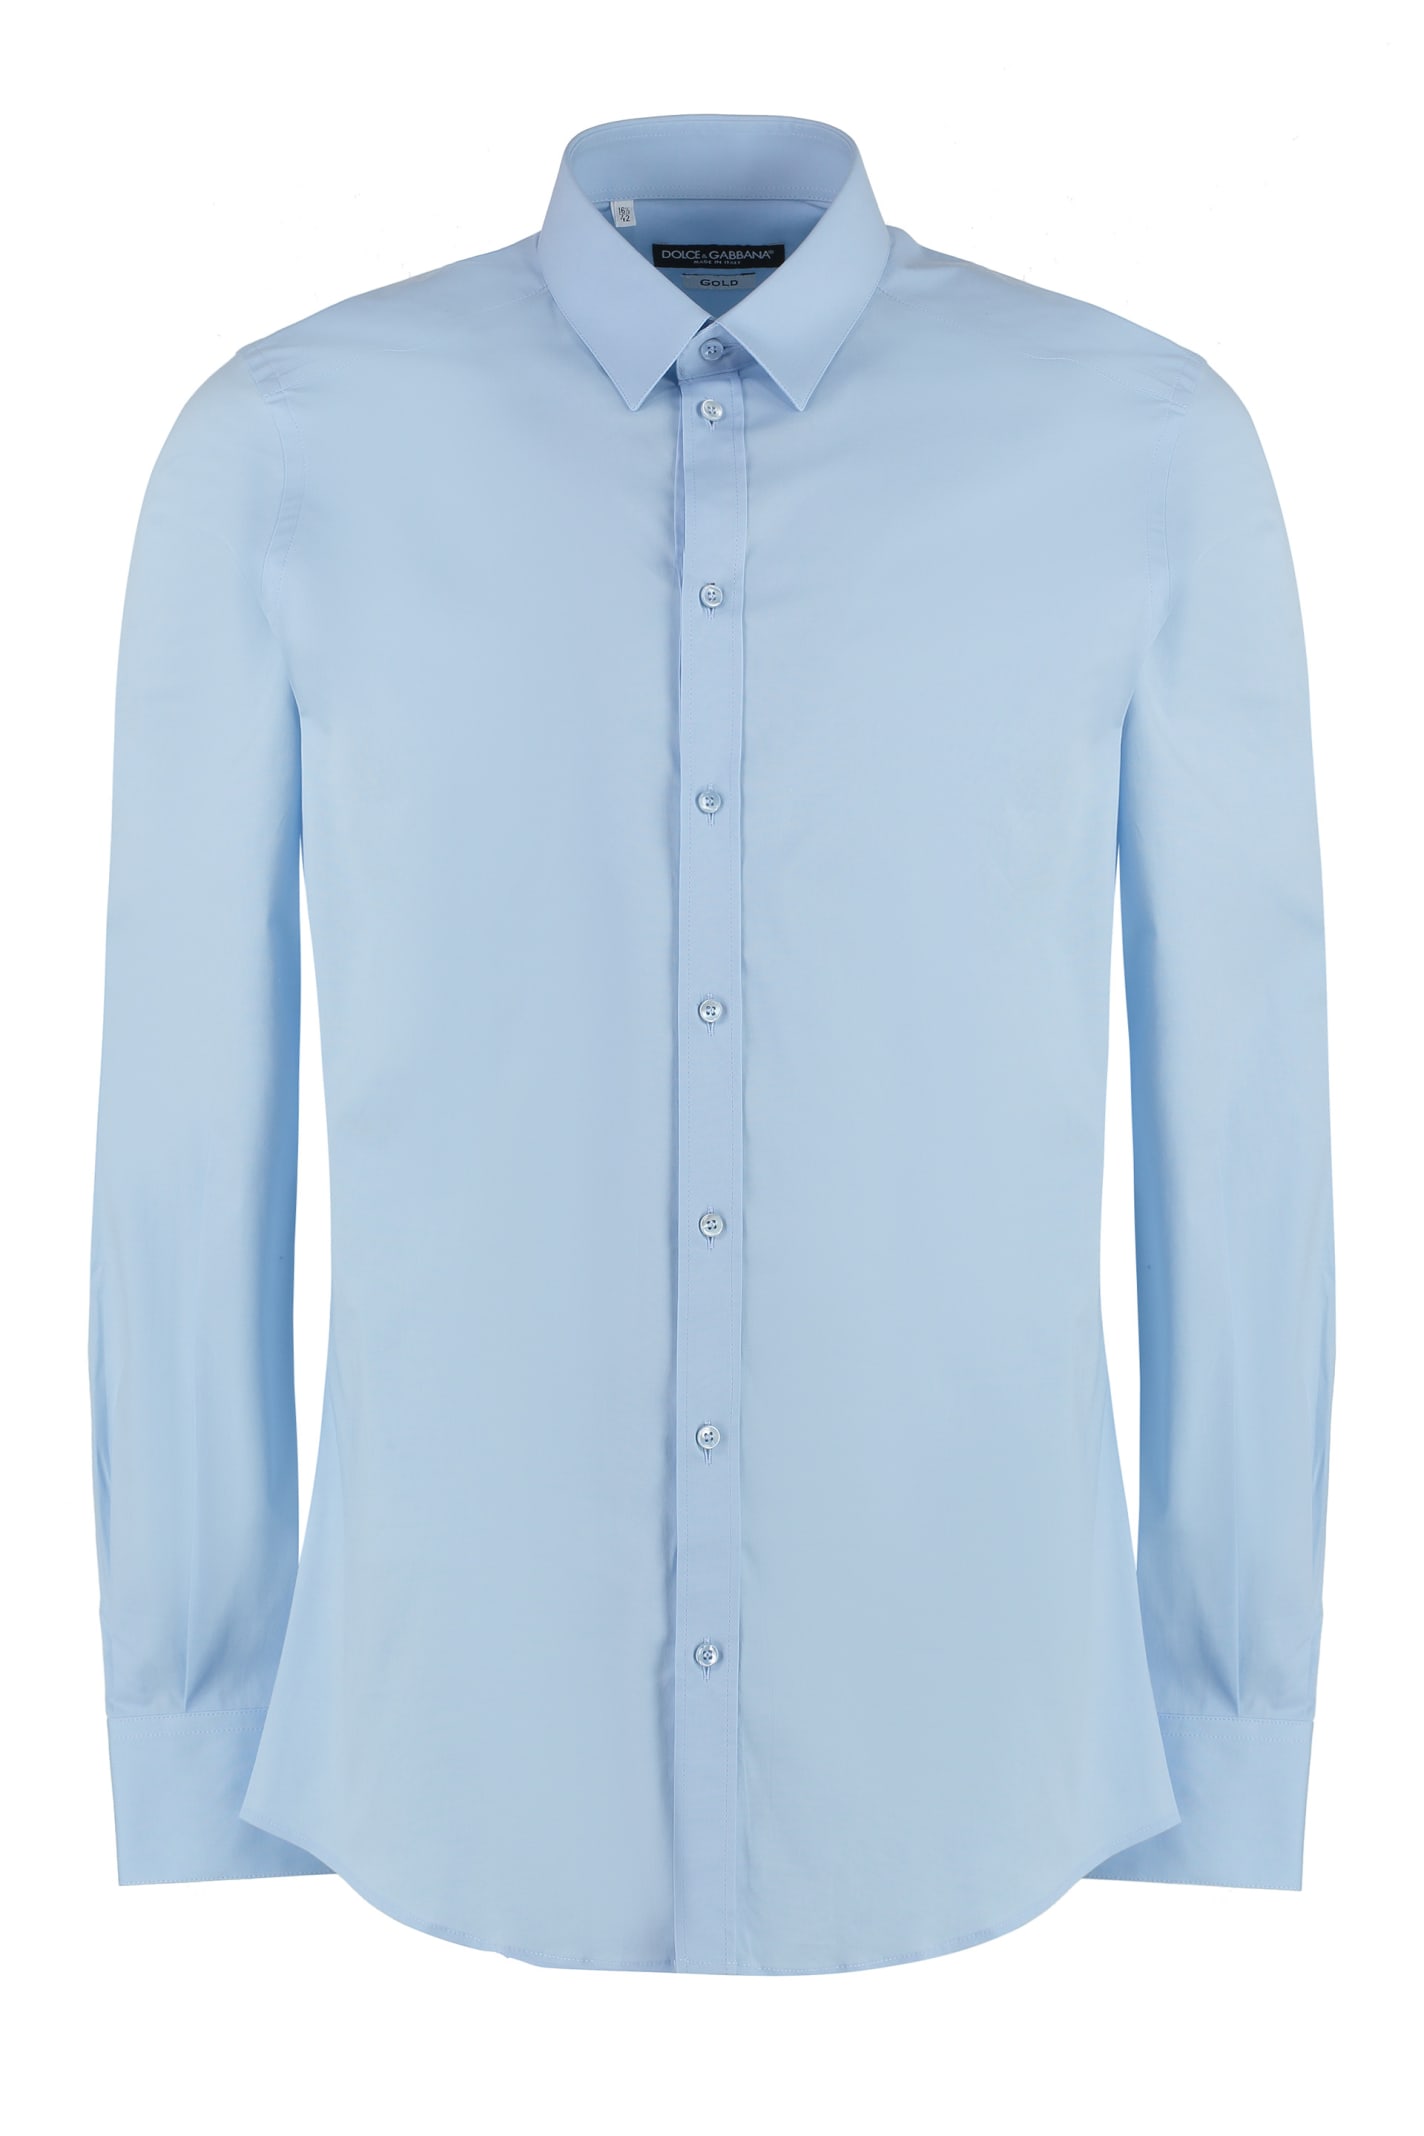 Dolce & Gabbana Cotton Shirt In Light Blue